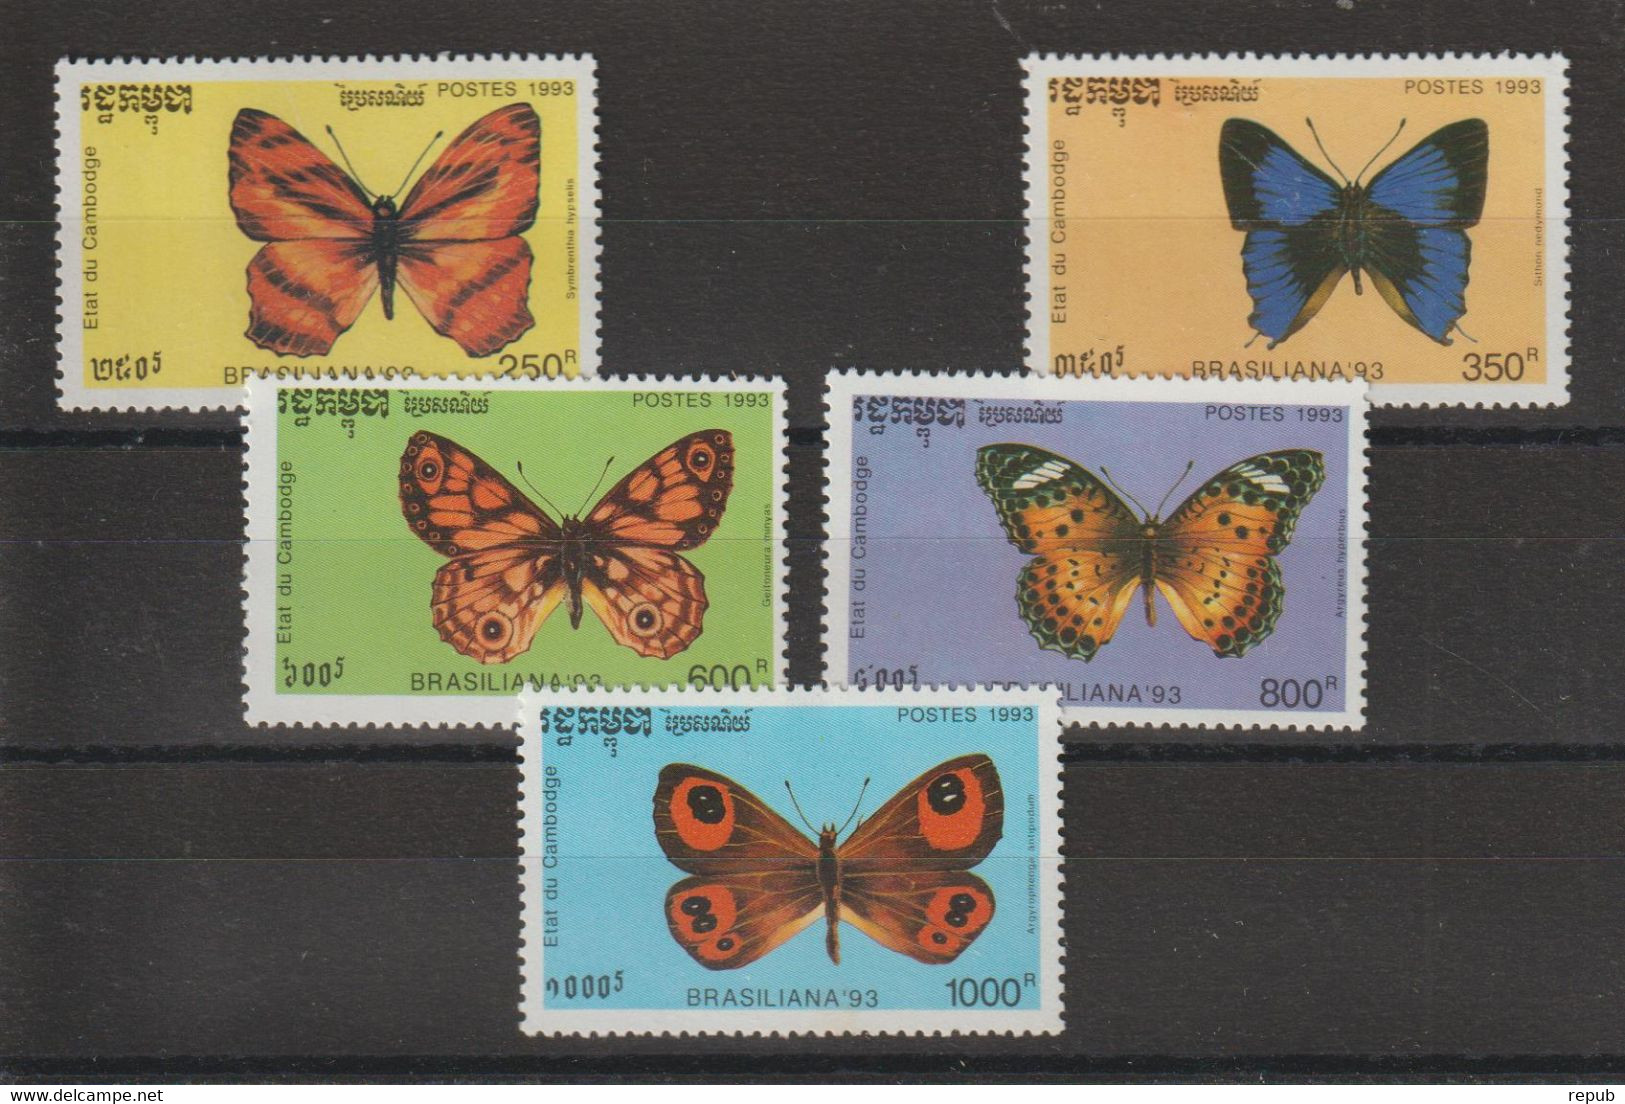 Cambodge 1993 Papillons 1115-9, 5 Val ** MNH - Cambodge